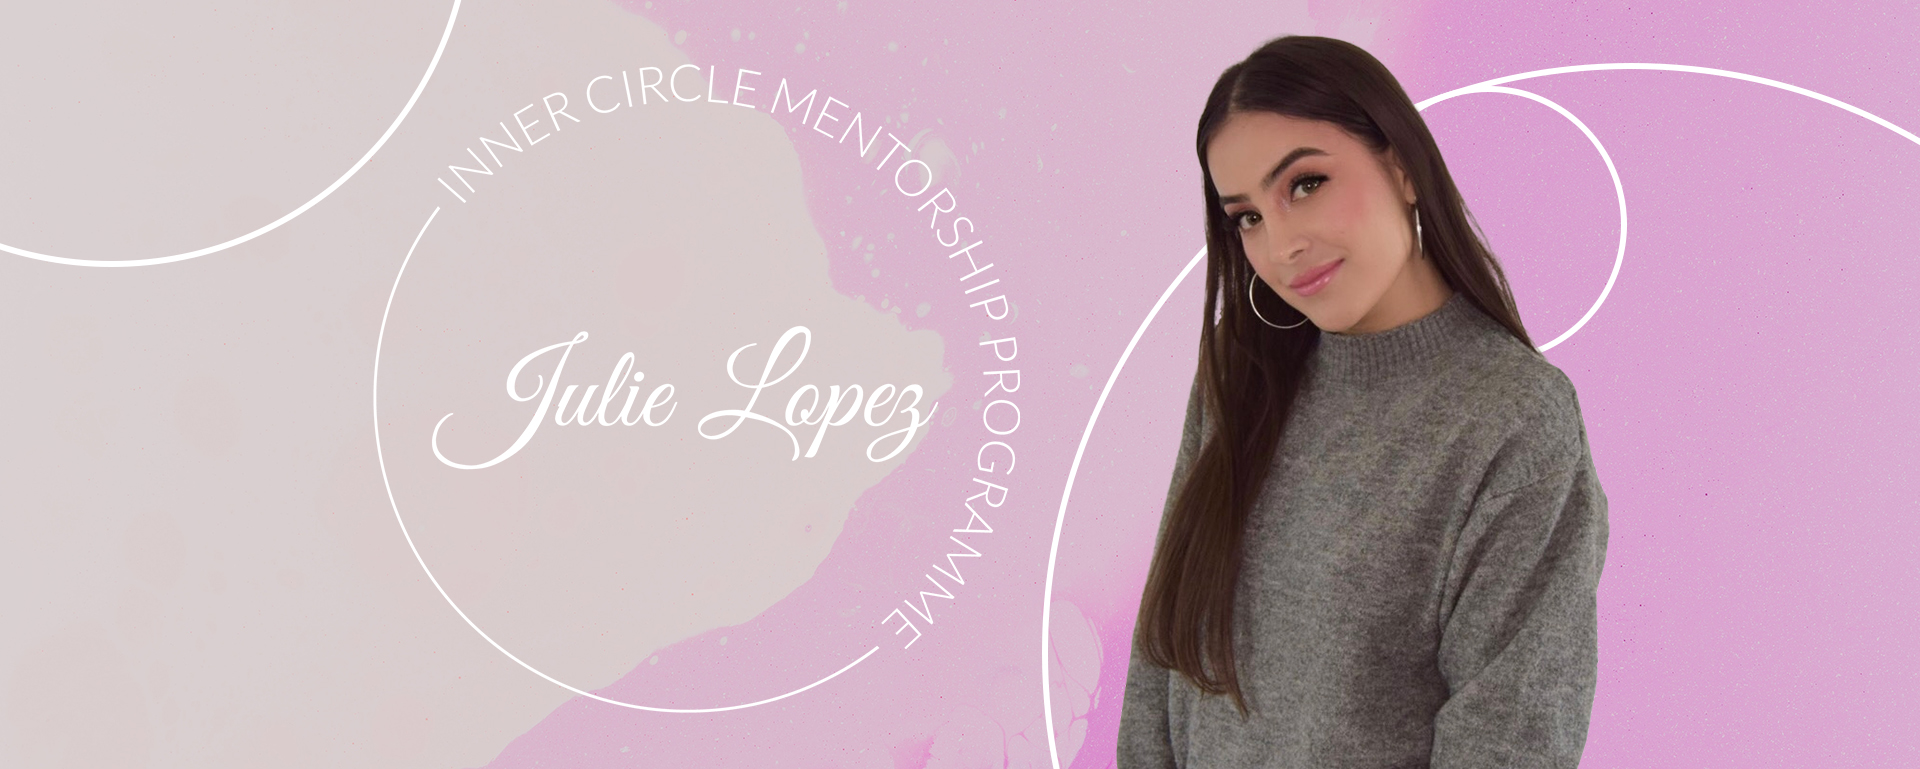 Julie Lopez - Inner Circle Mentorship Program